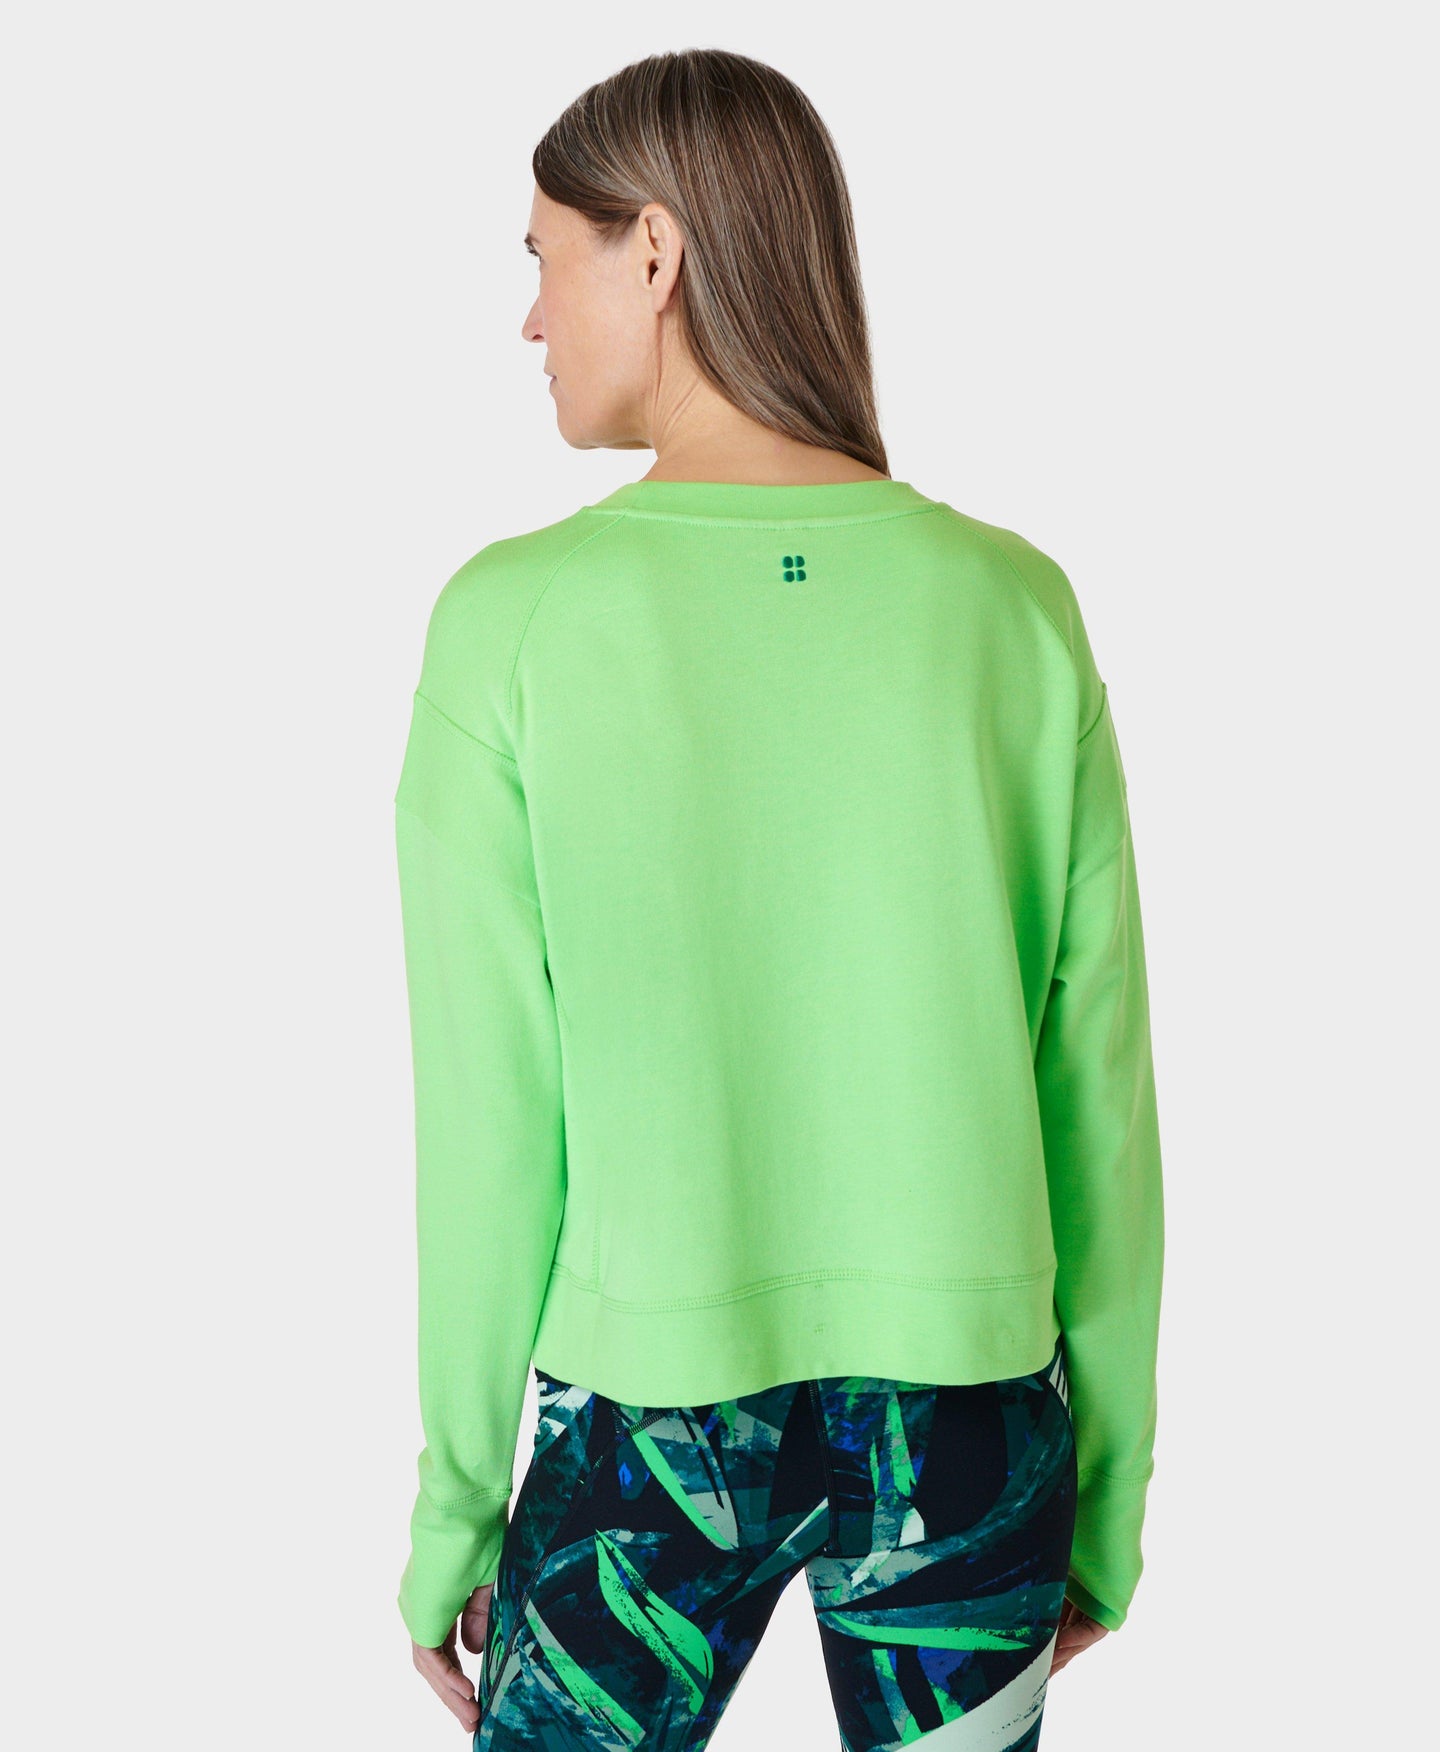 After Class Crop Sweatshirt Sb5622c Zest-Green